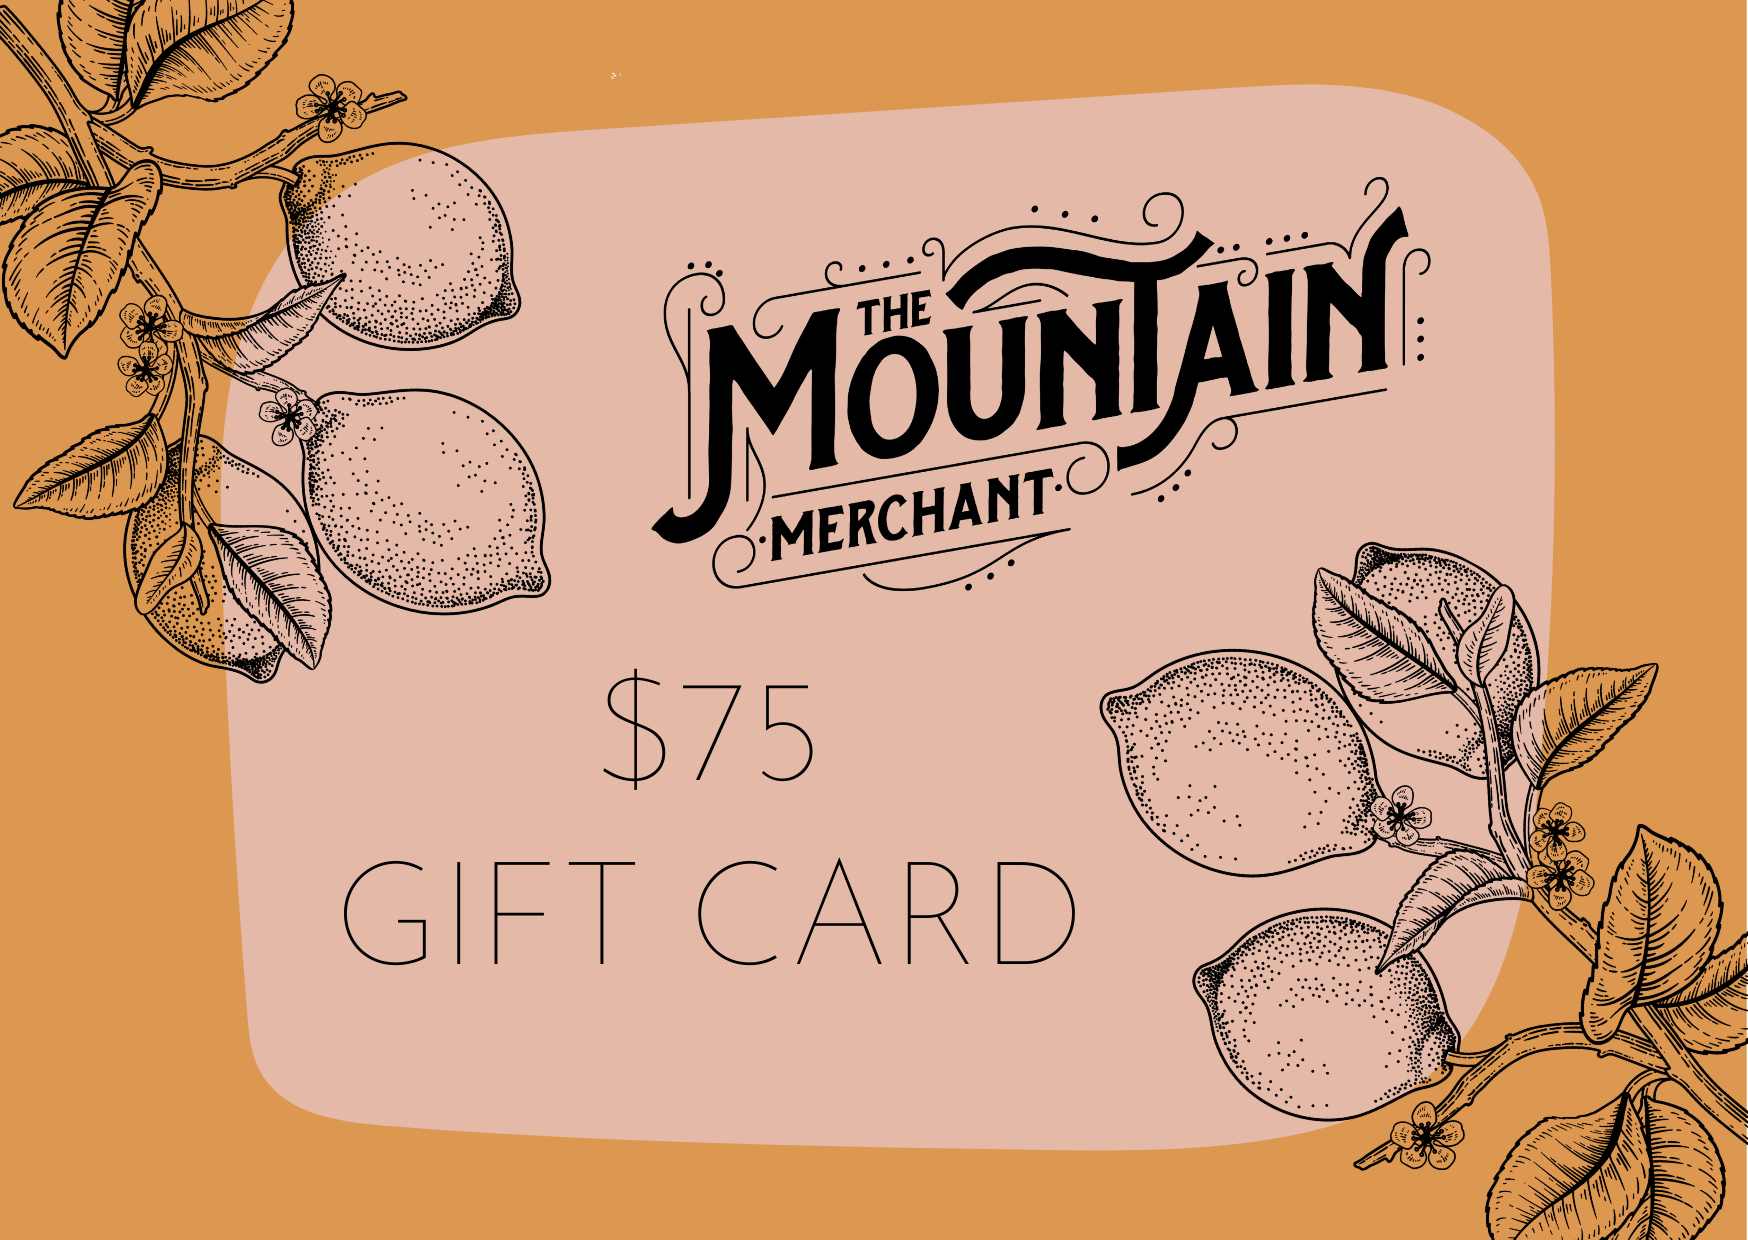 The Mountain Merchant - Gift Card $75 -The Mountain Merchant -The Mountain Merchant